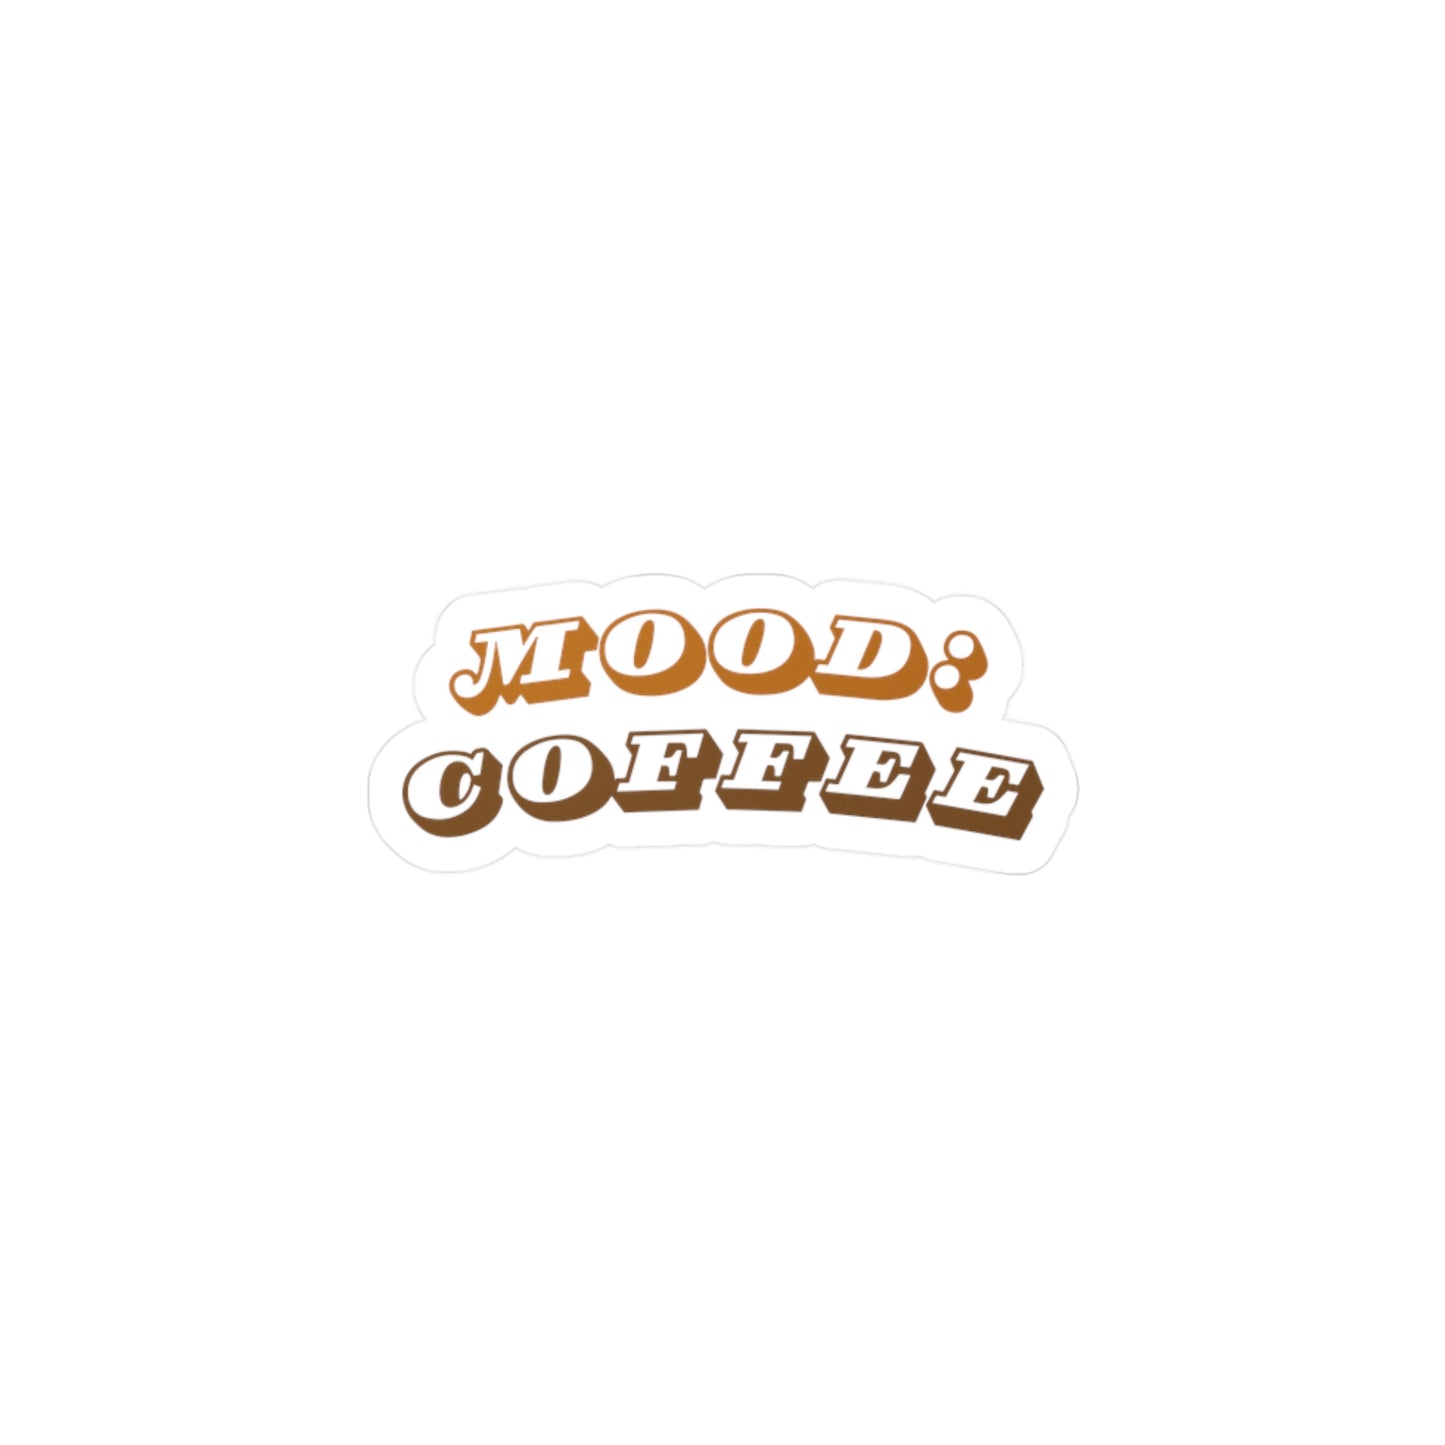 Mood: Coffee Stickers